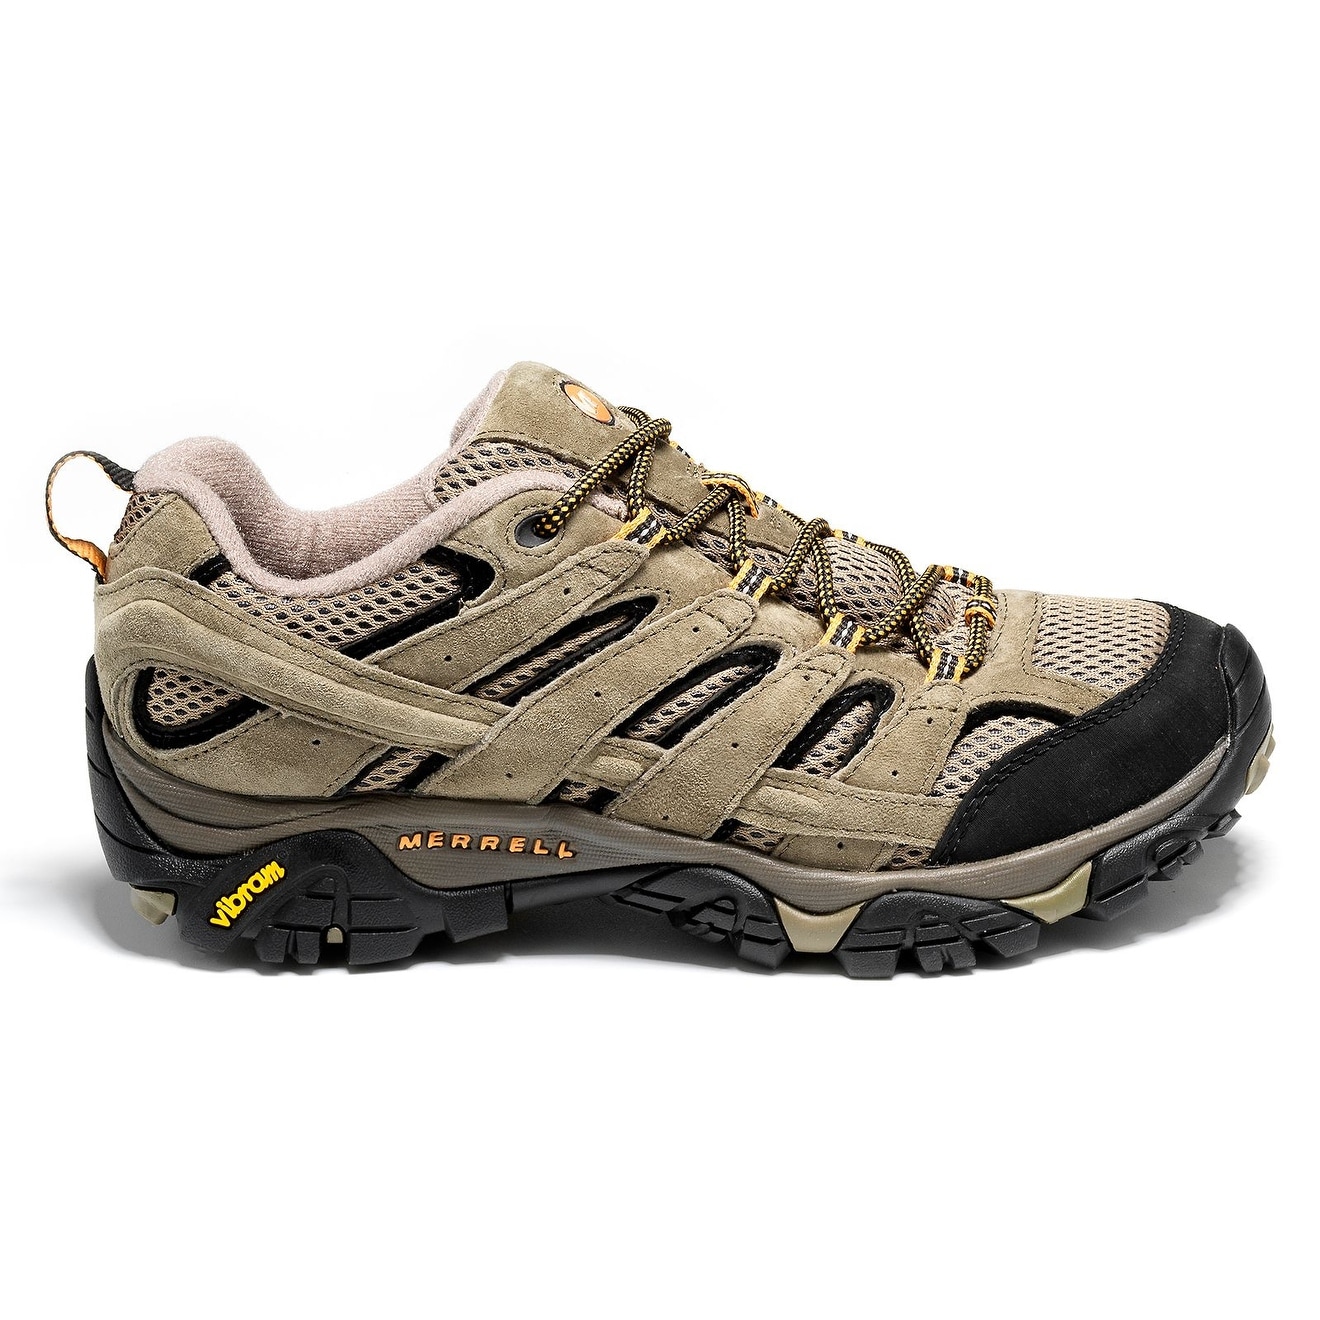 Merrell Men's Moab 2 Ventilator Hiking Shoes, Peca...